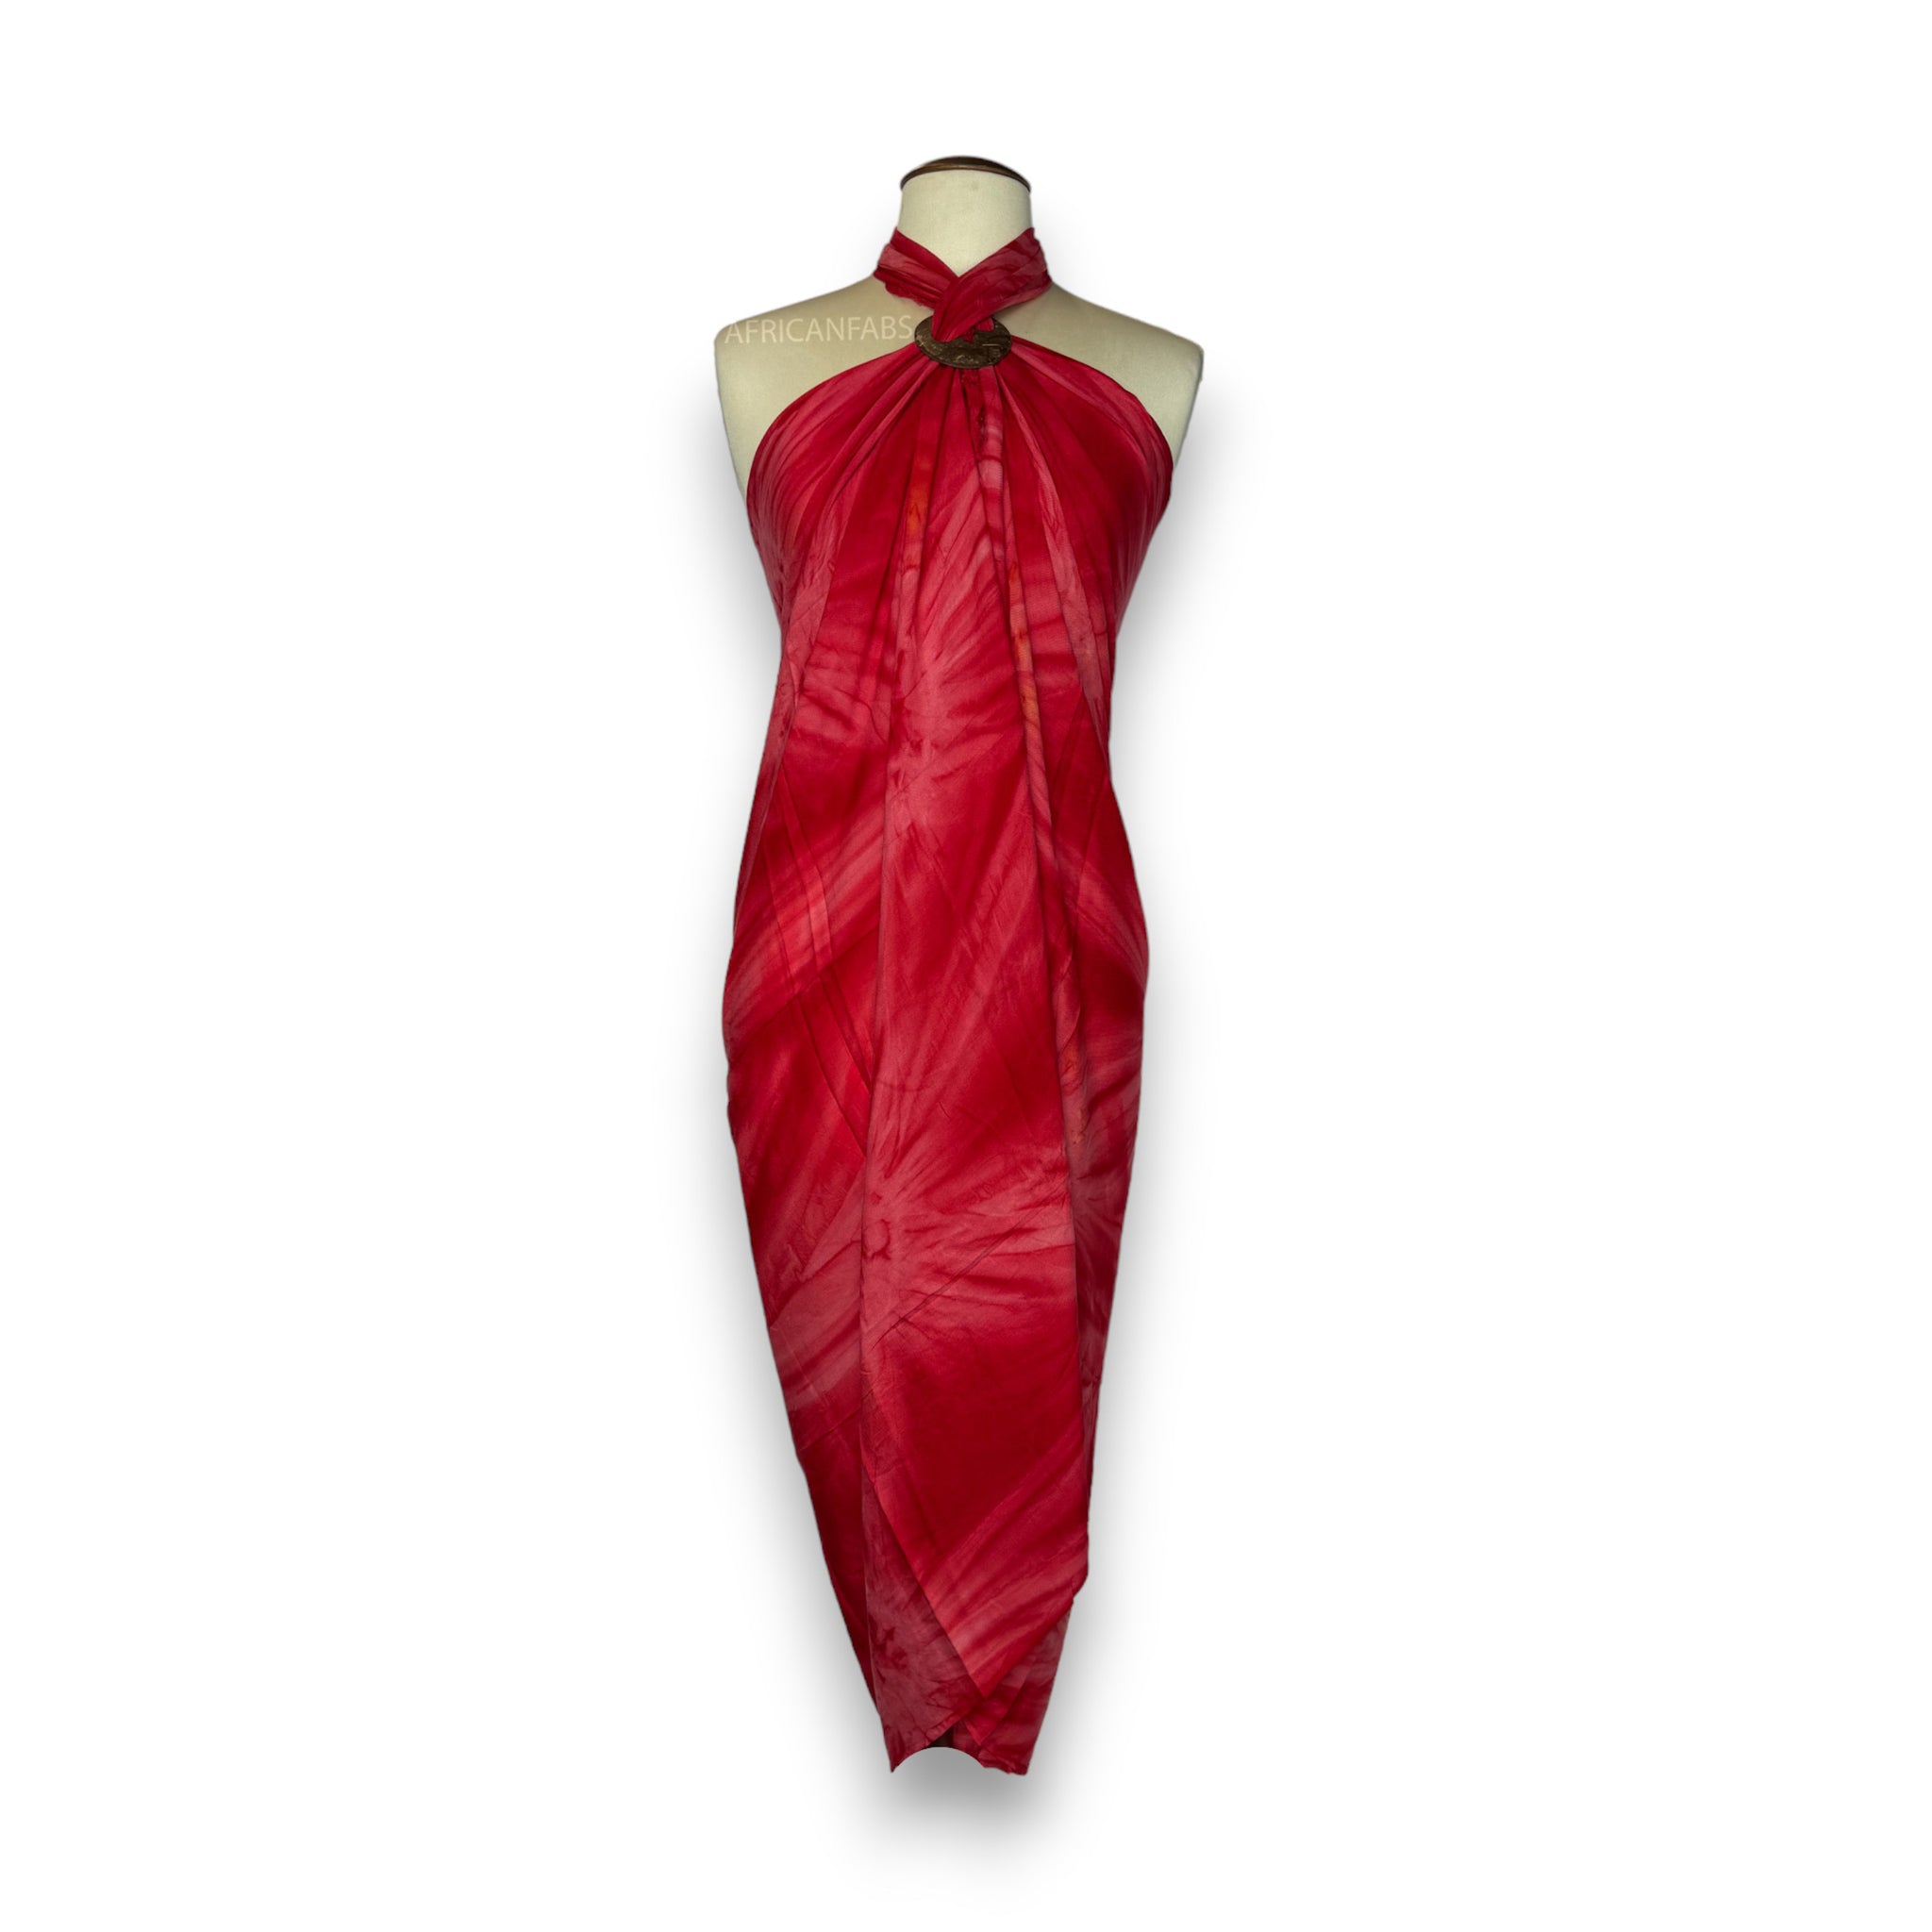 Sarong / pareo - Strandkleding wikkelrok - Tie dye rood